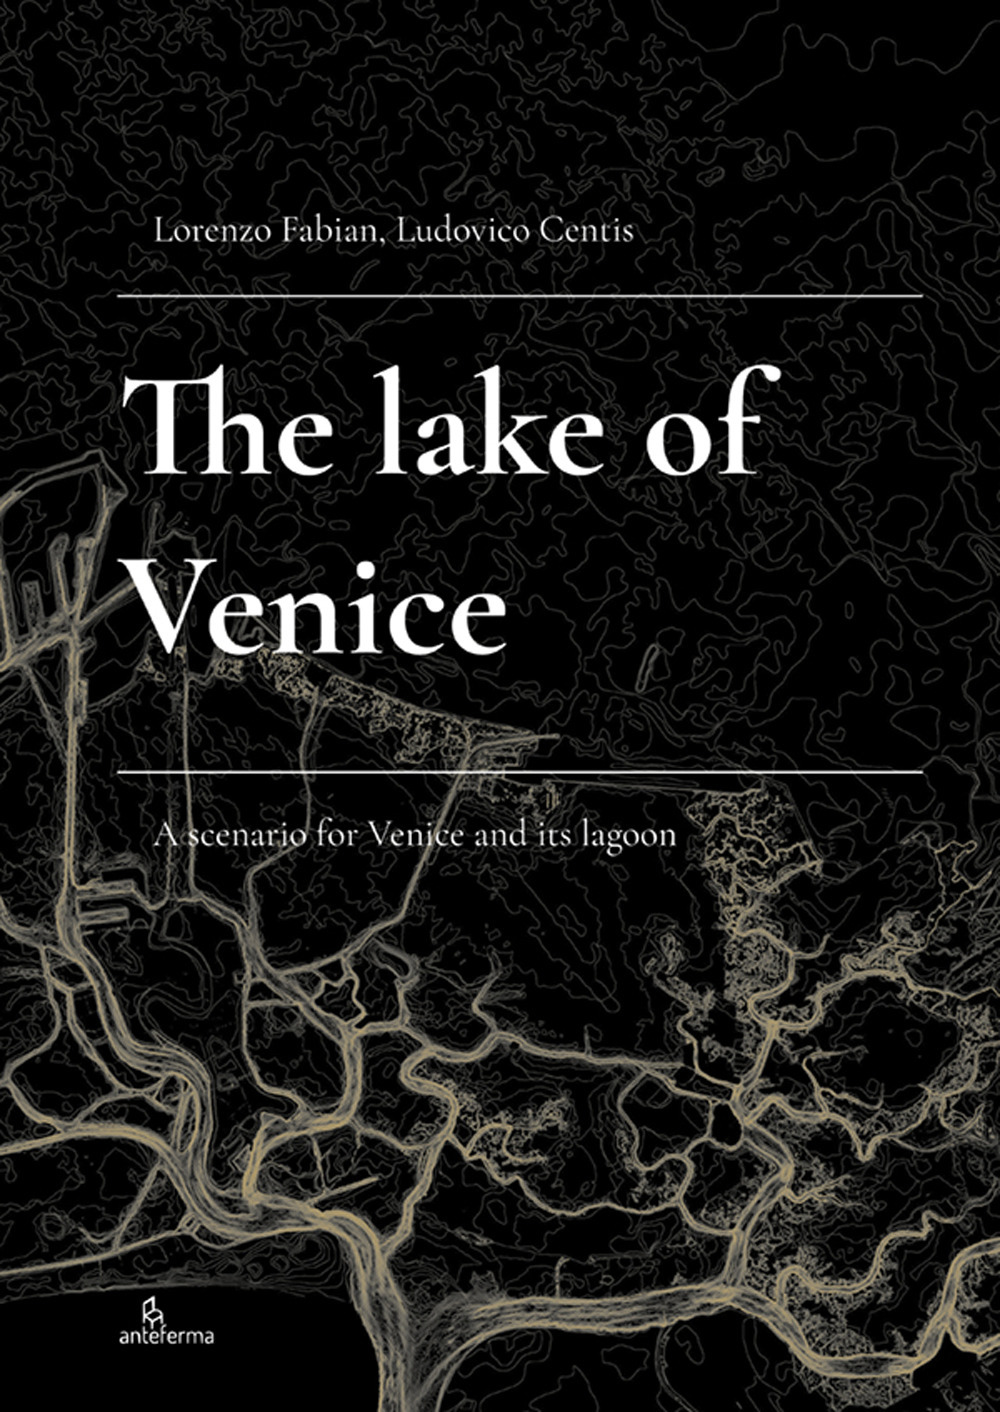 The Lake of Venice. A scenario for Venice and its lagoon